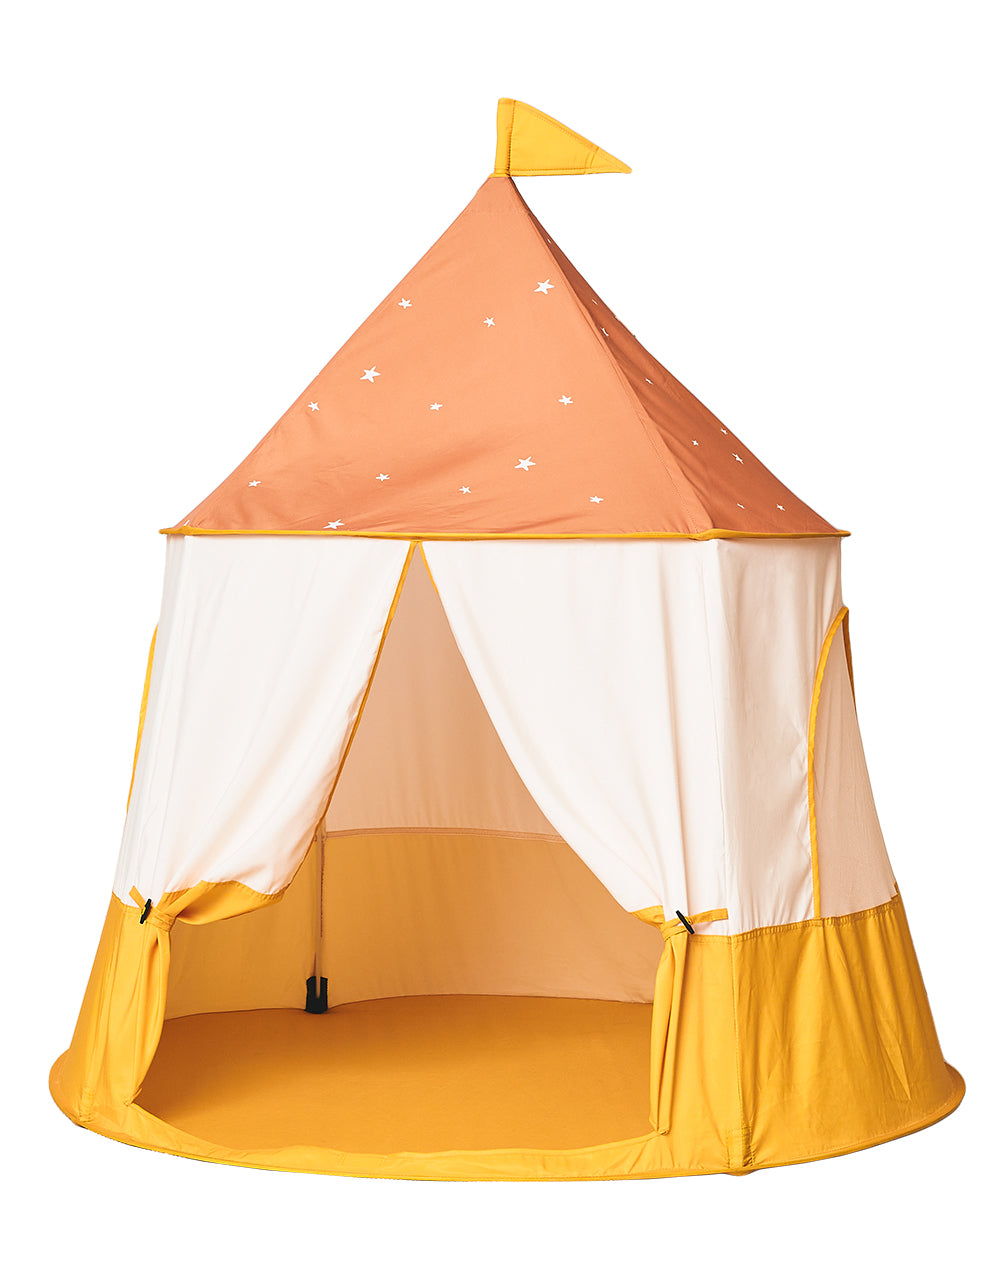 The Retro Play Tent